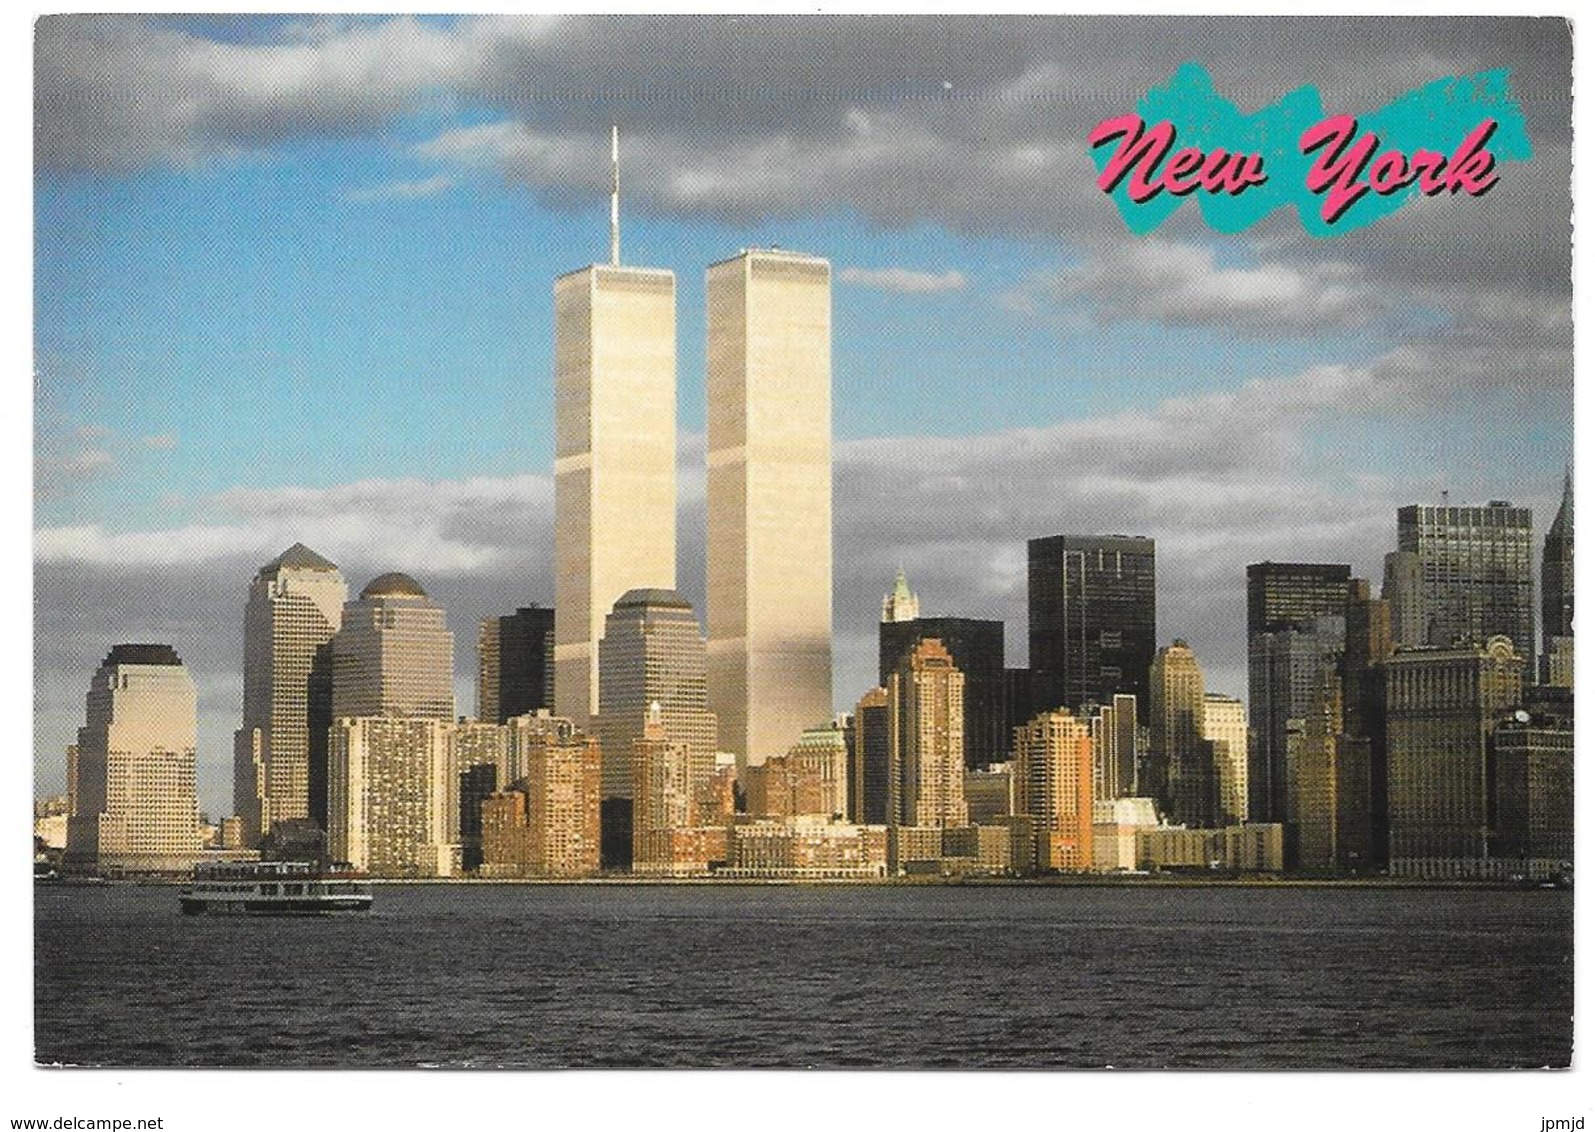 New York - DOWNTOWN MANHATTAN - 2000 - World Trade Center